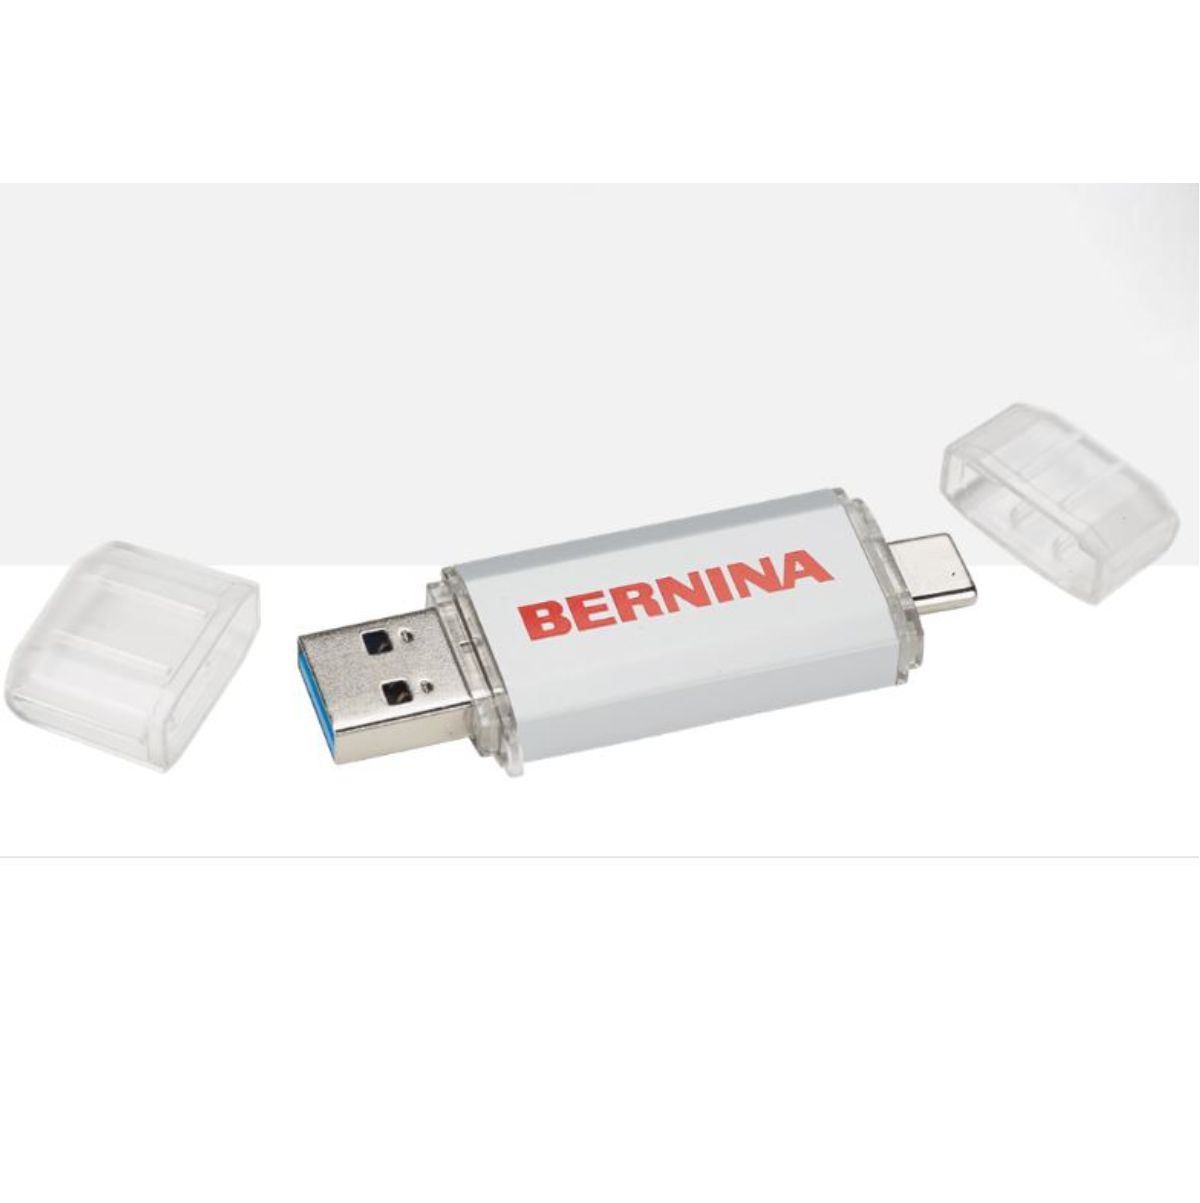 Bernina USB Stick leer 16 GB